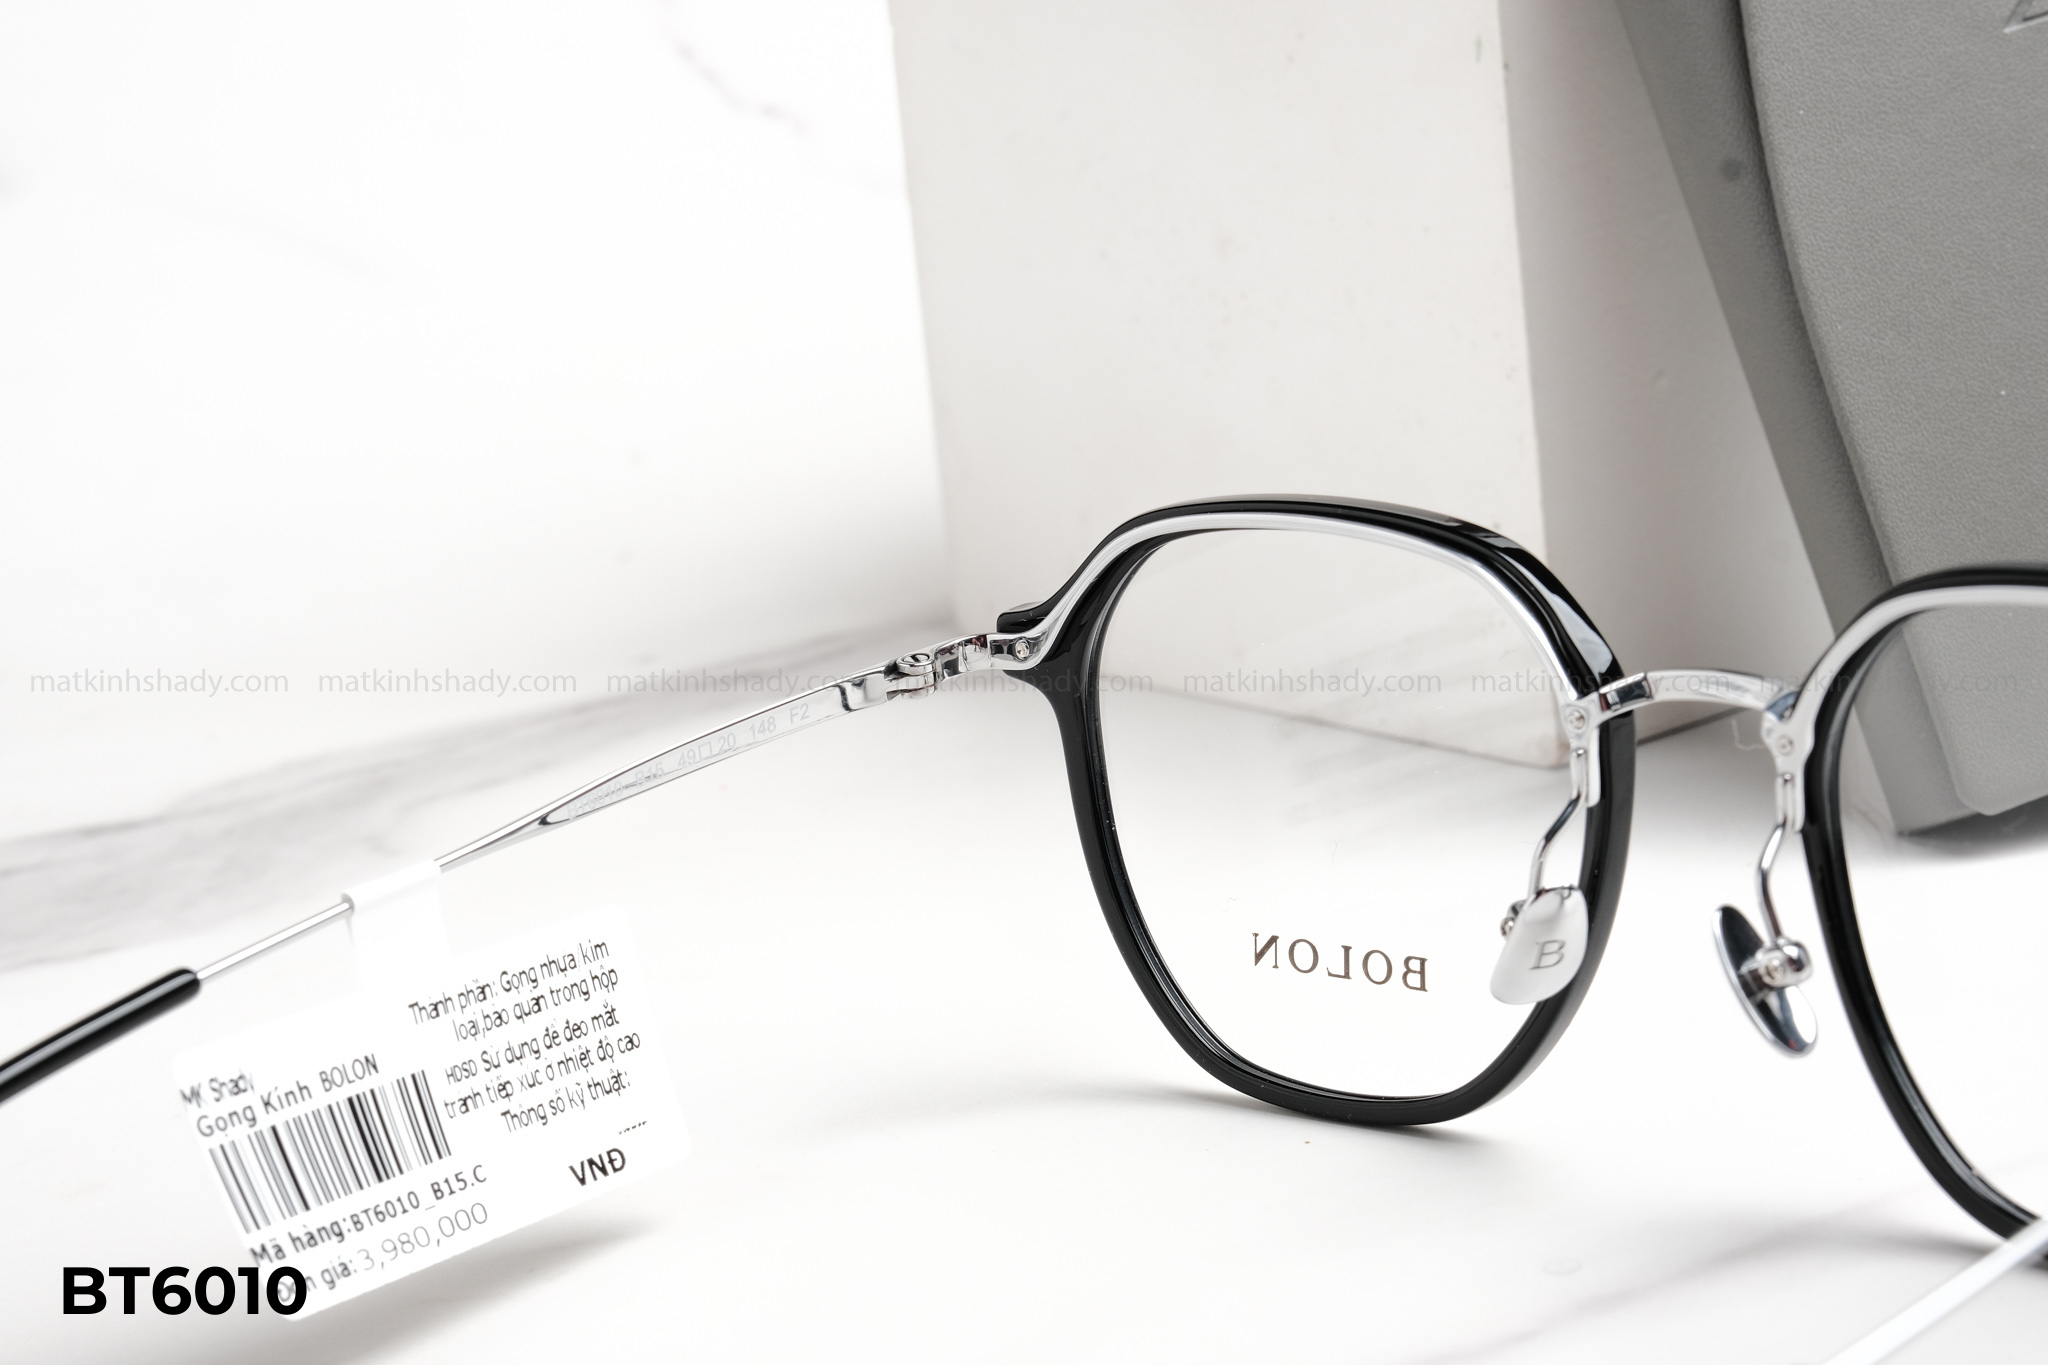  Bolon Eyewear - Glasses - BT6010 